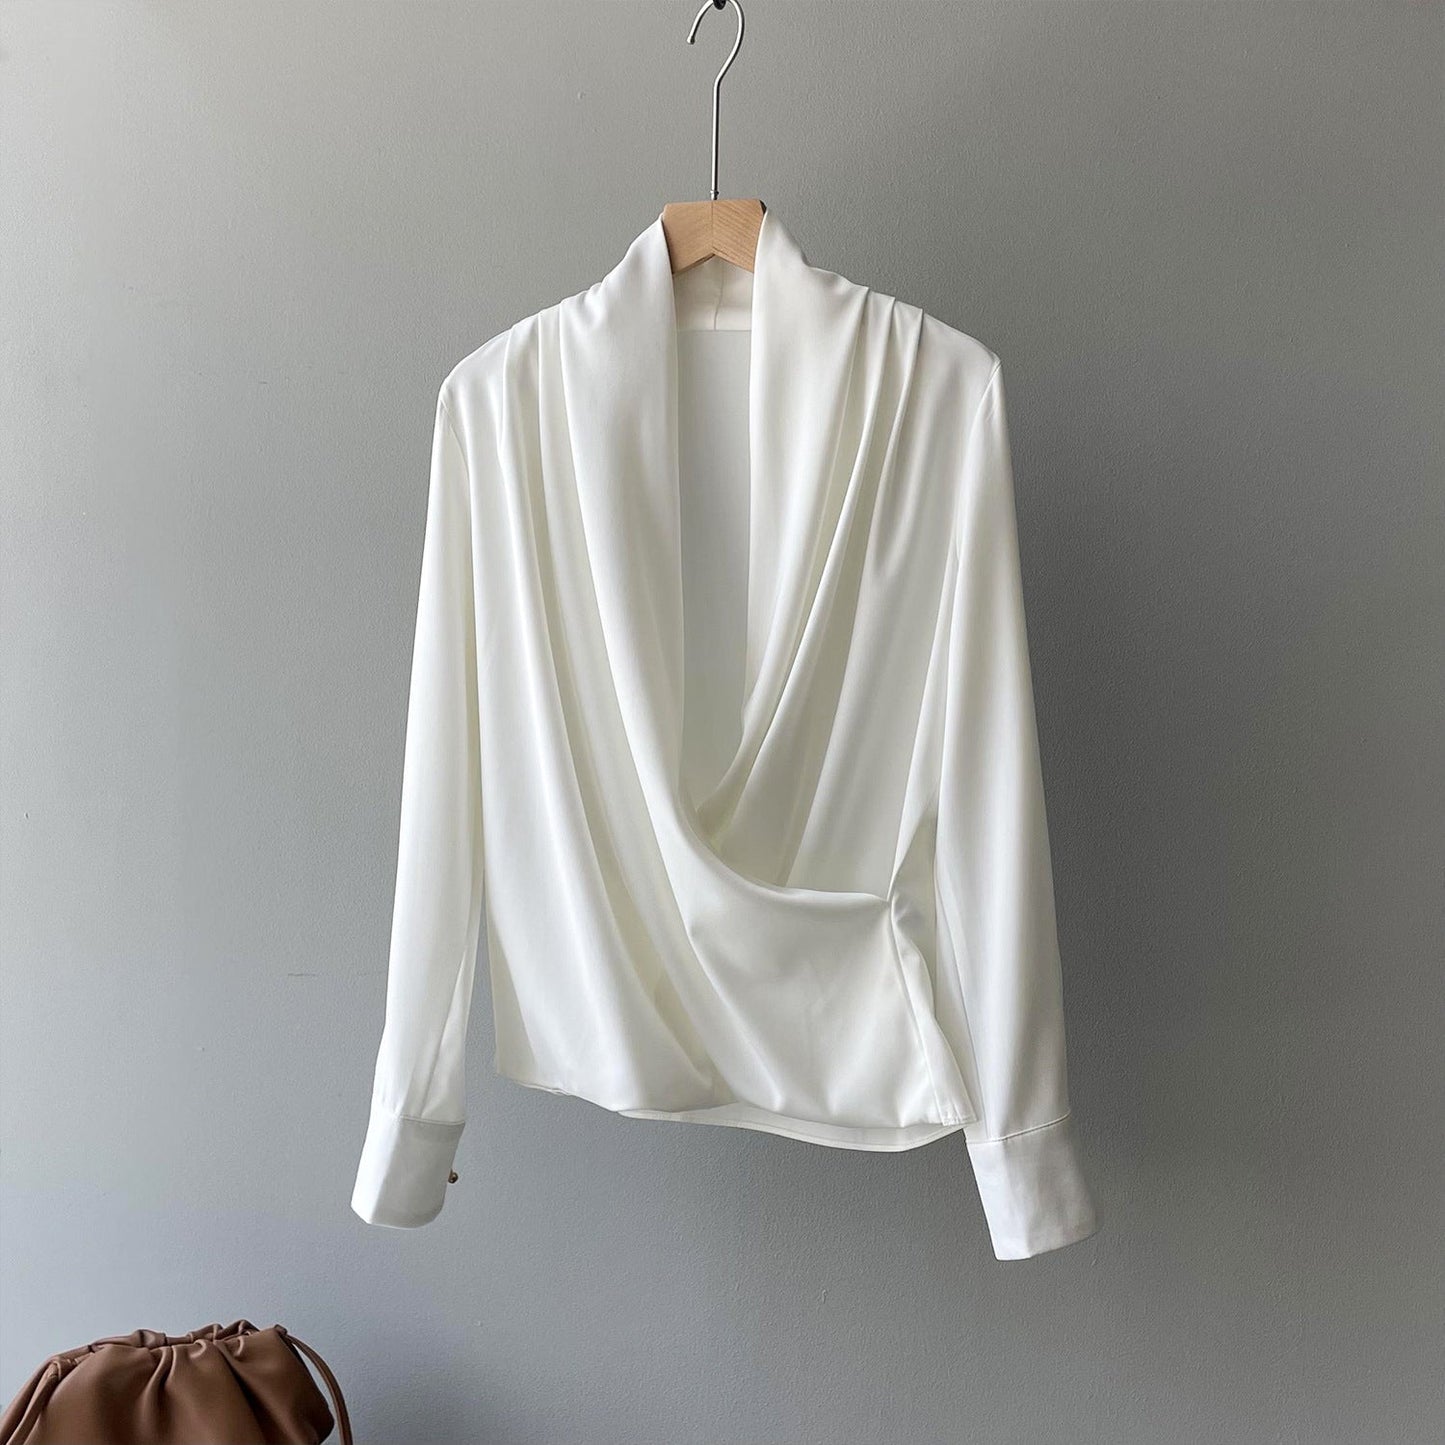 Elegant Satin Long Sleeves Office Lady Shirts-Shirts & Tops-White-M-Free Shipping at meselling99